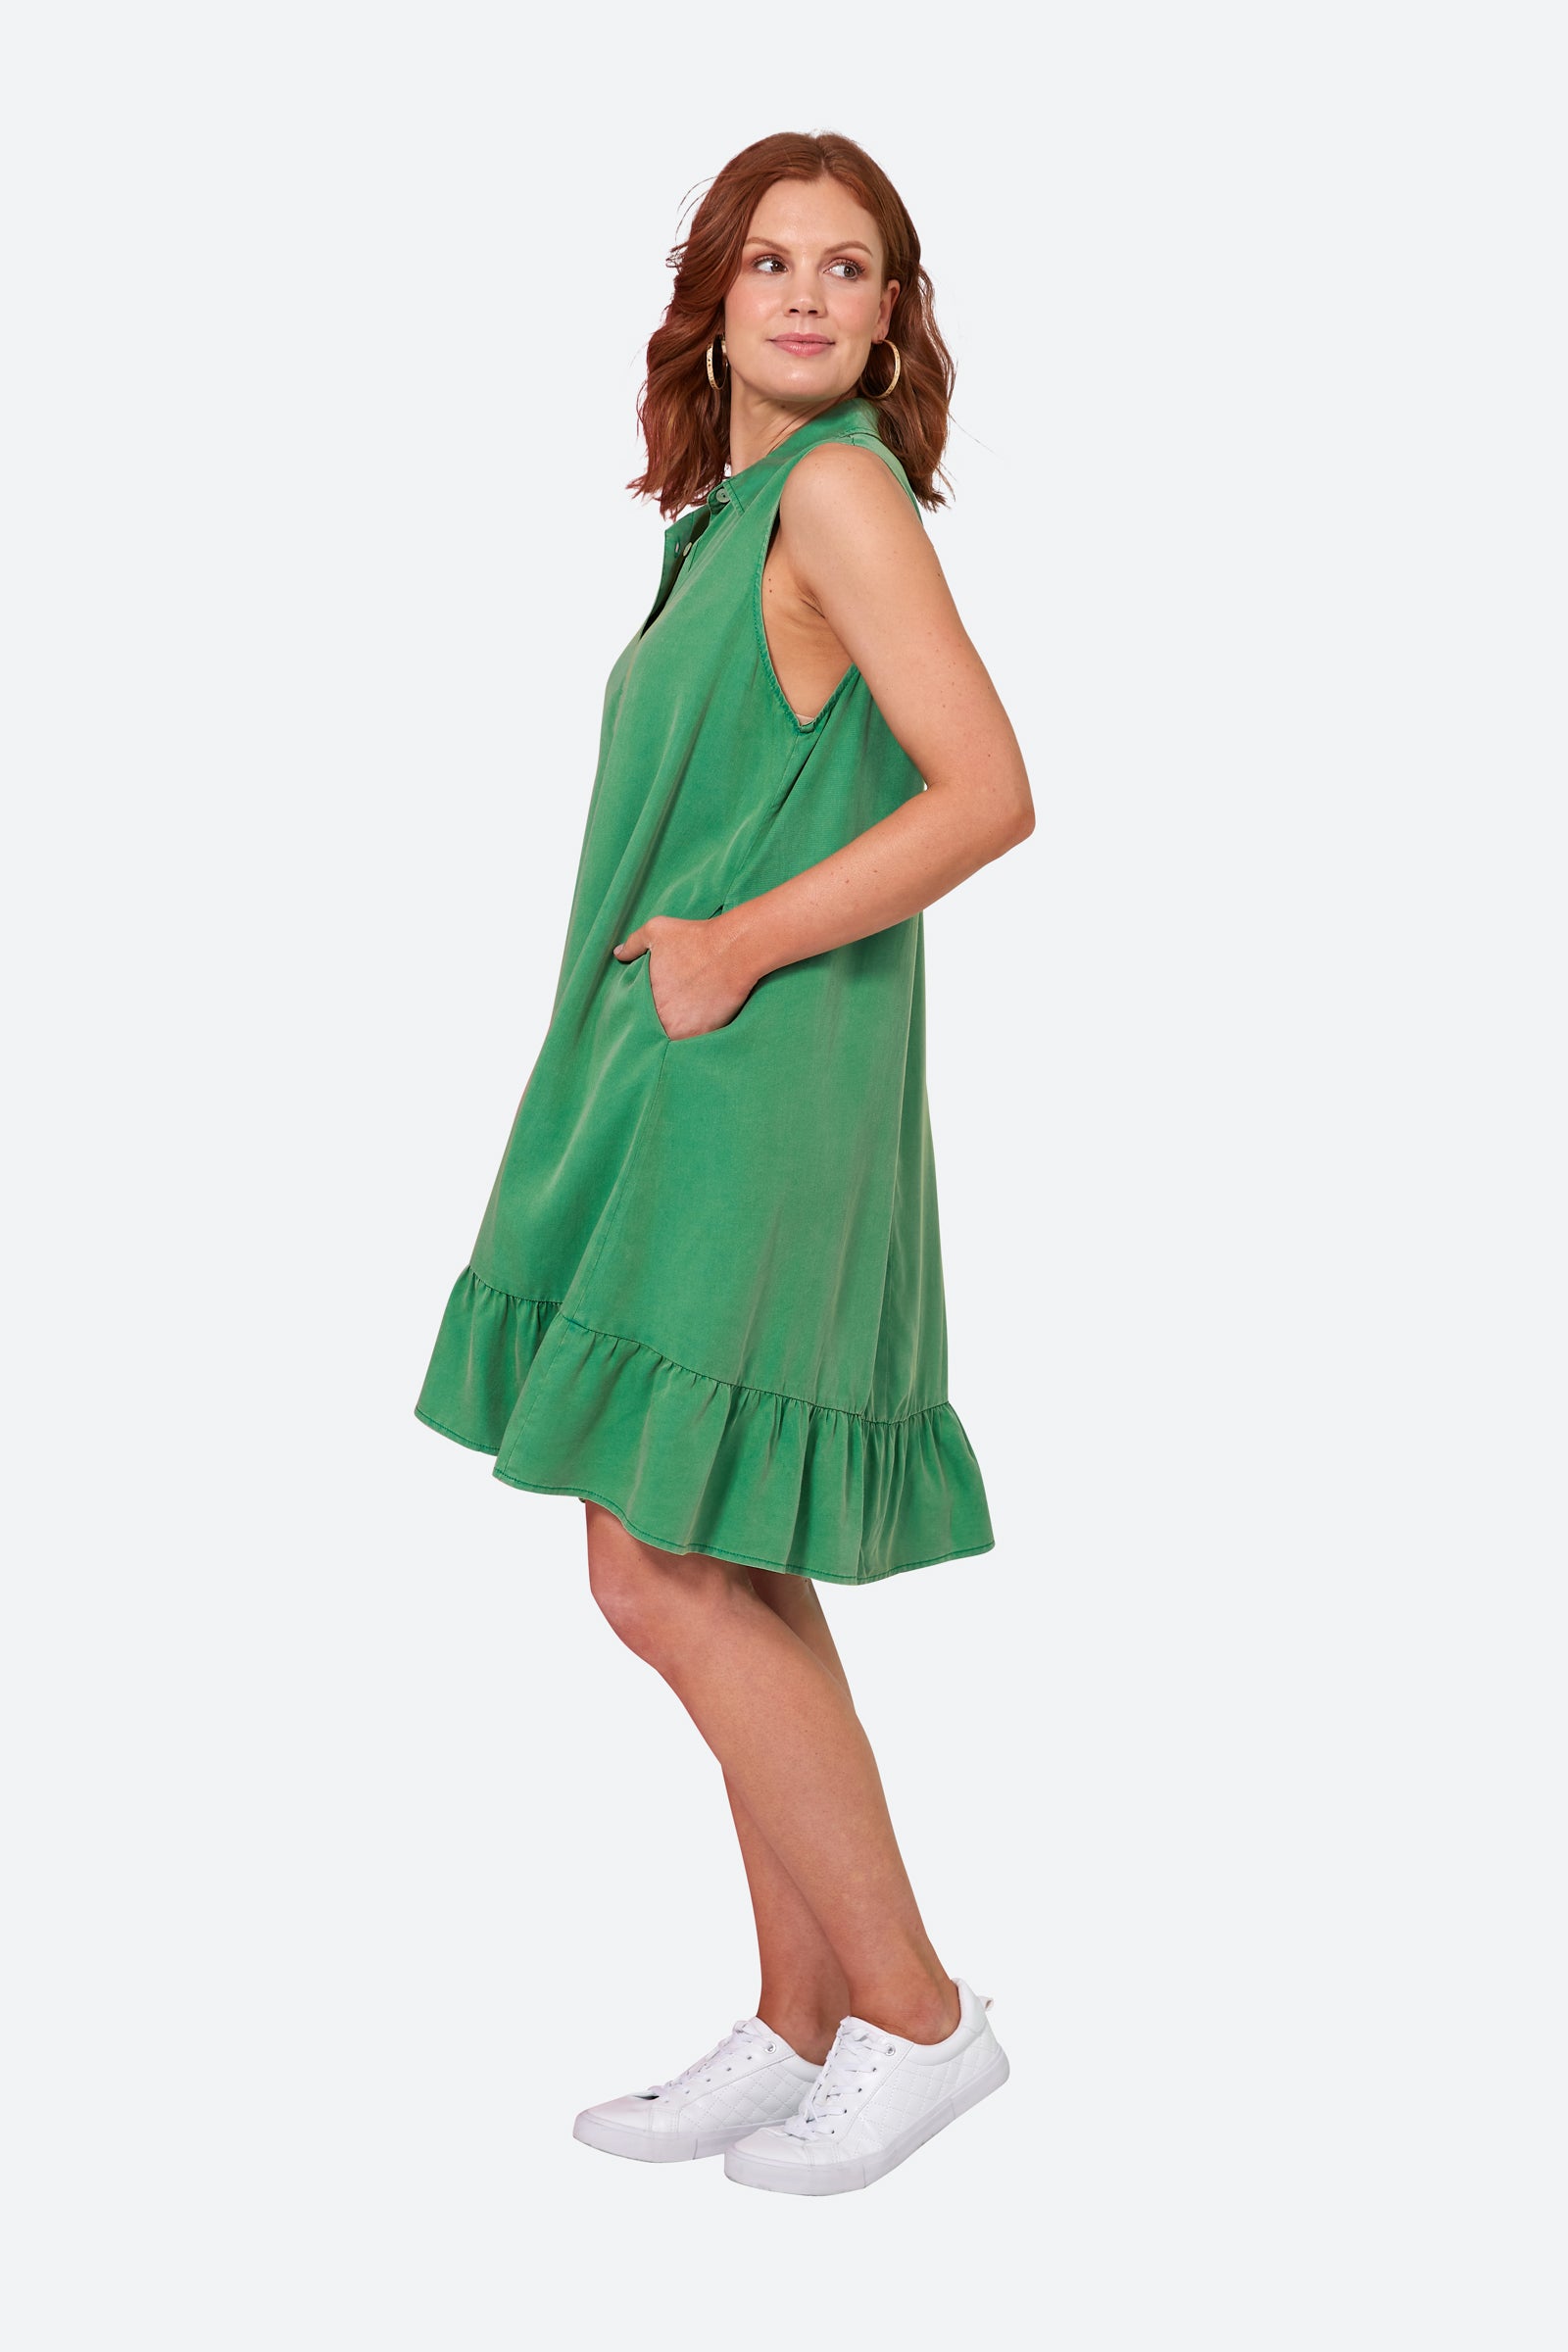 Elan Sleeveless Dress - Meadow - eb&ive Clothing - Dress Mid Sleeveless